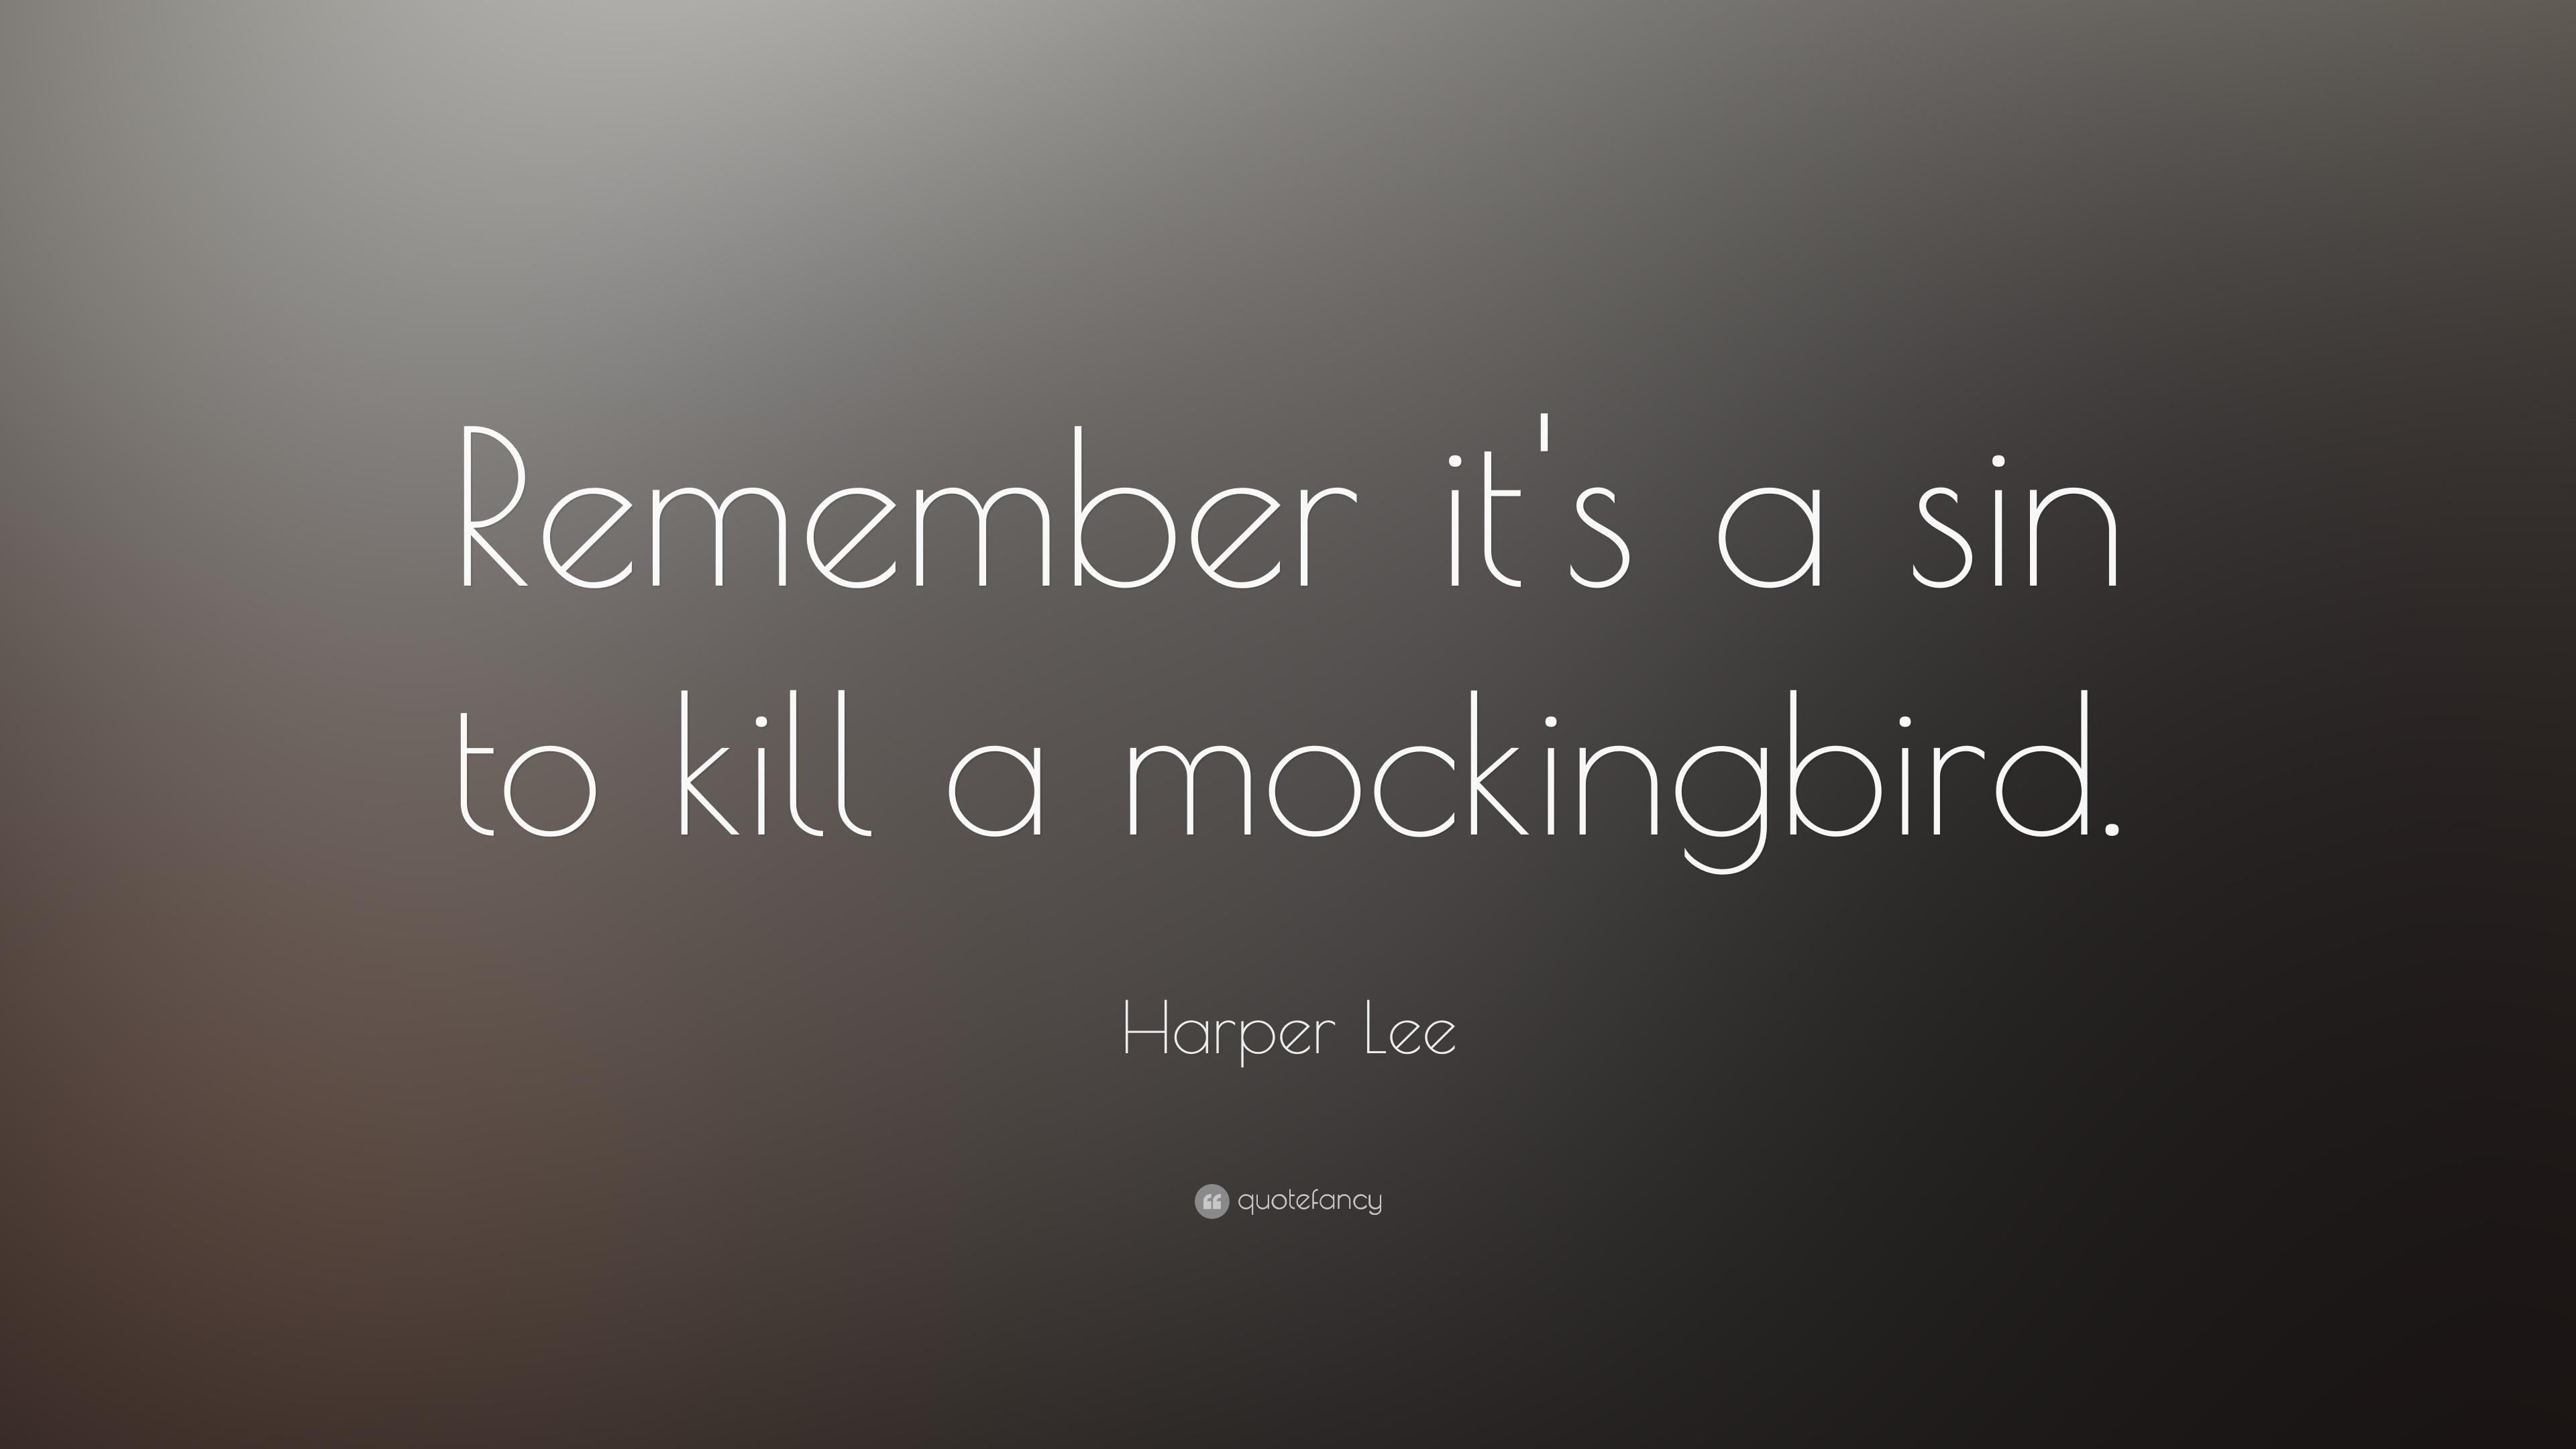 Harper Lee Quote: “Remember it's a sin to kill a mockingbird.” 15